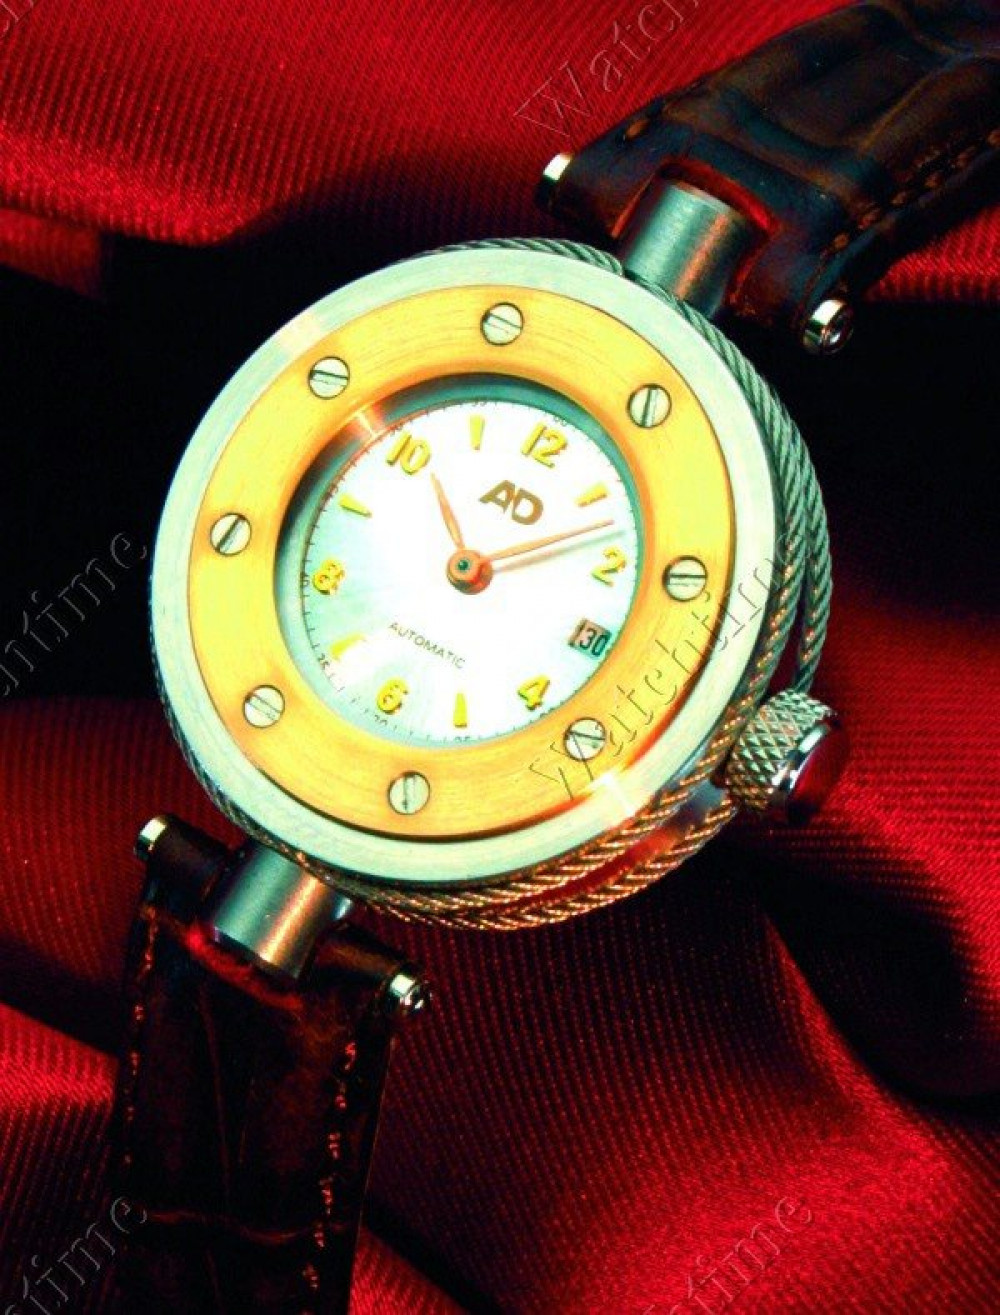 Zegarek firmy AD-Chronographen, model Medium